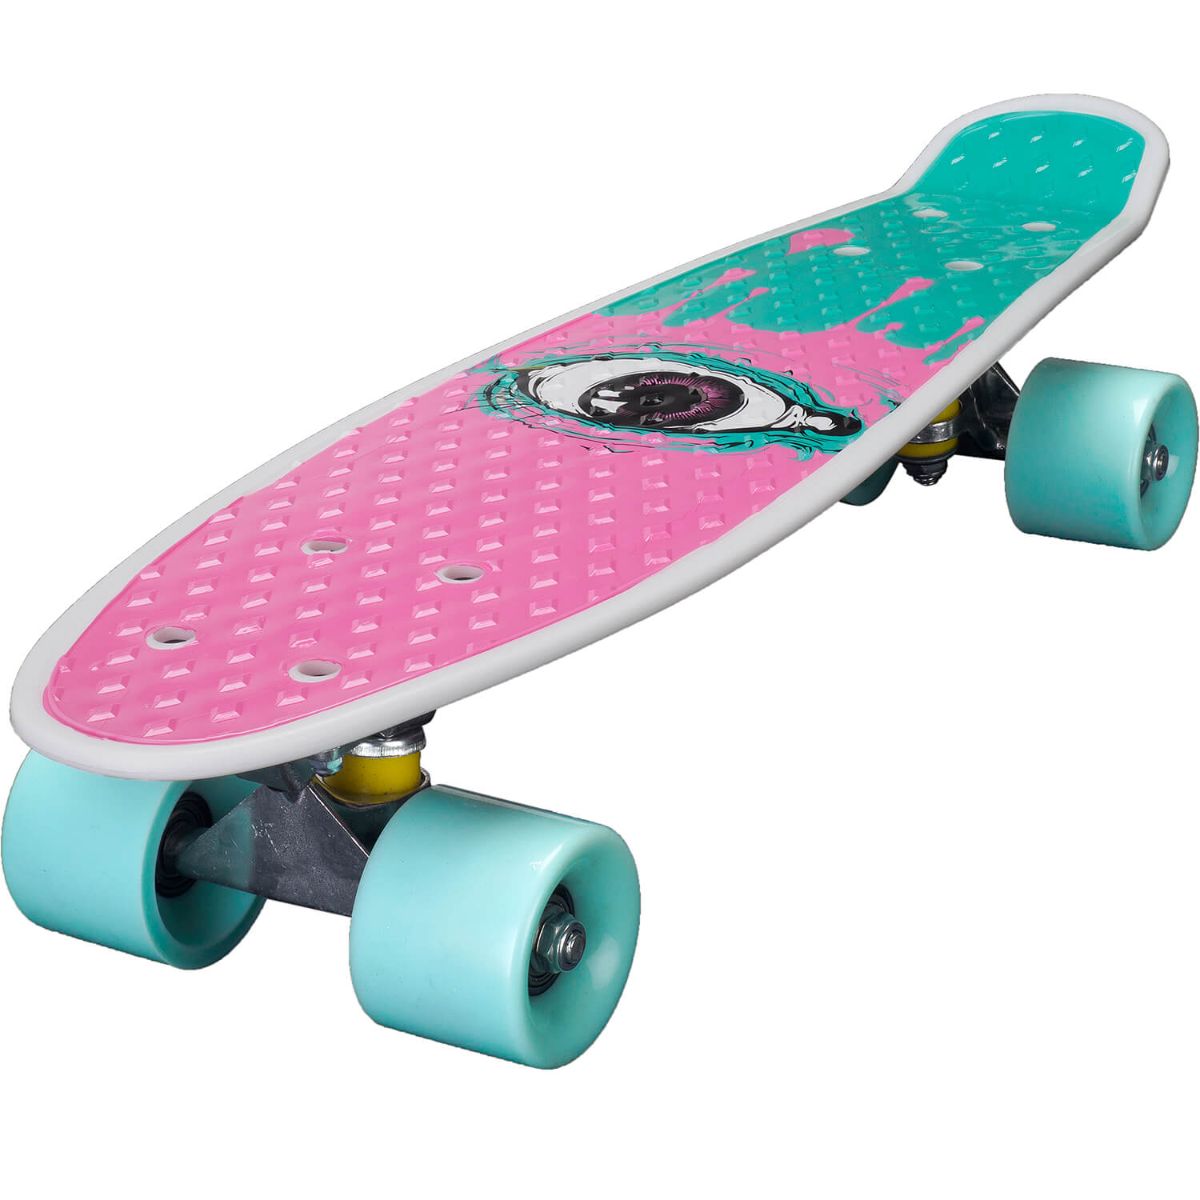 Penny board Action One, 22 ABEC-7 PU, Aluminium Truck, Pink Eye Role si skateboard imagine 2022